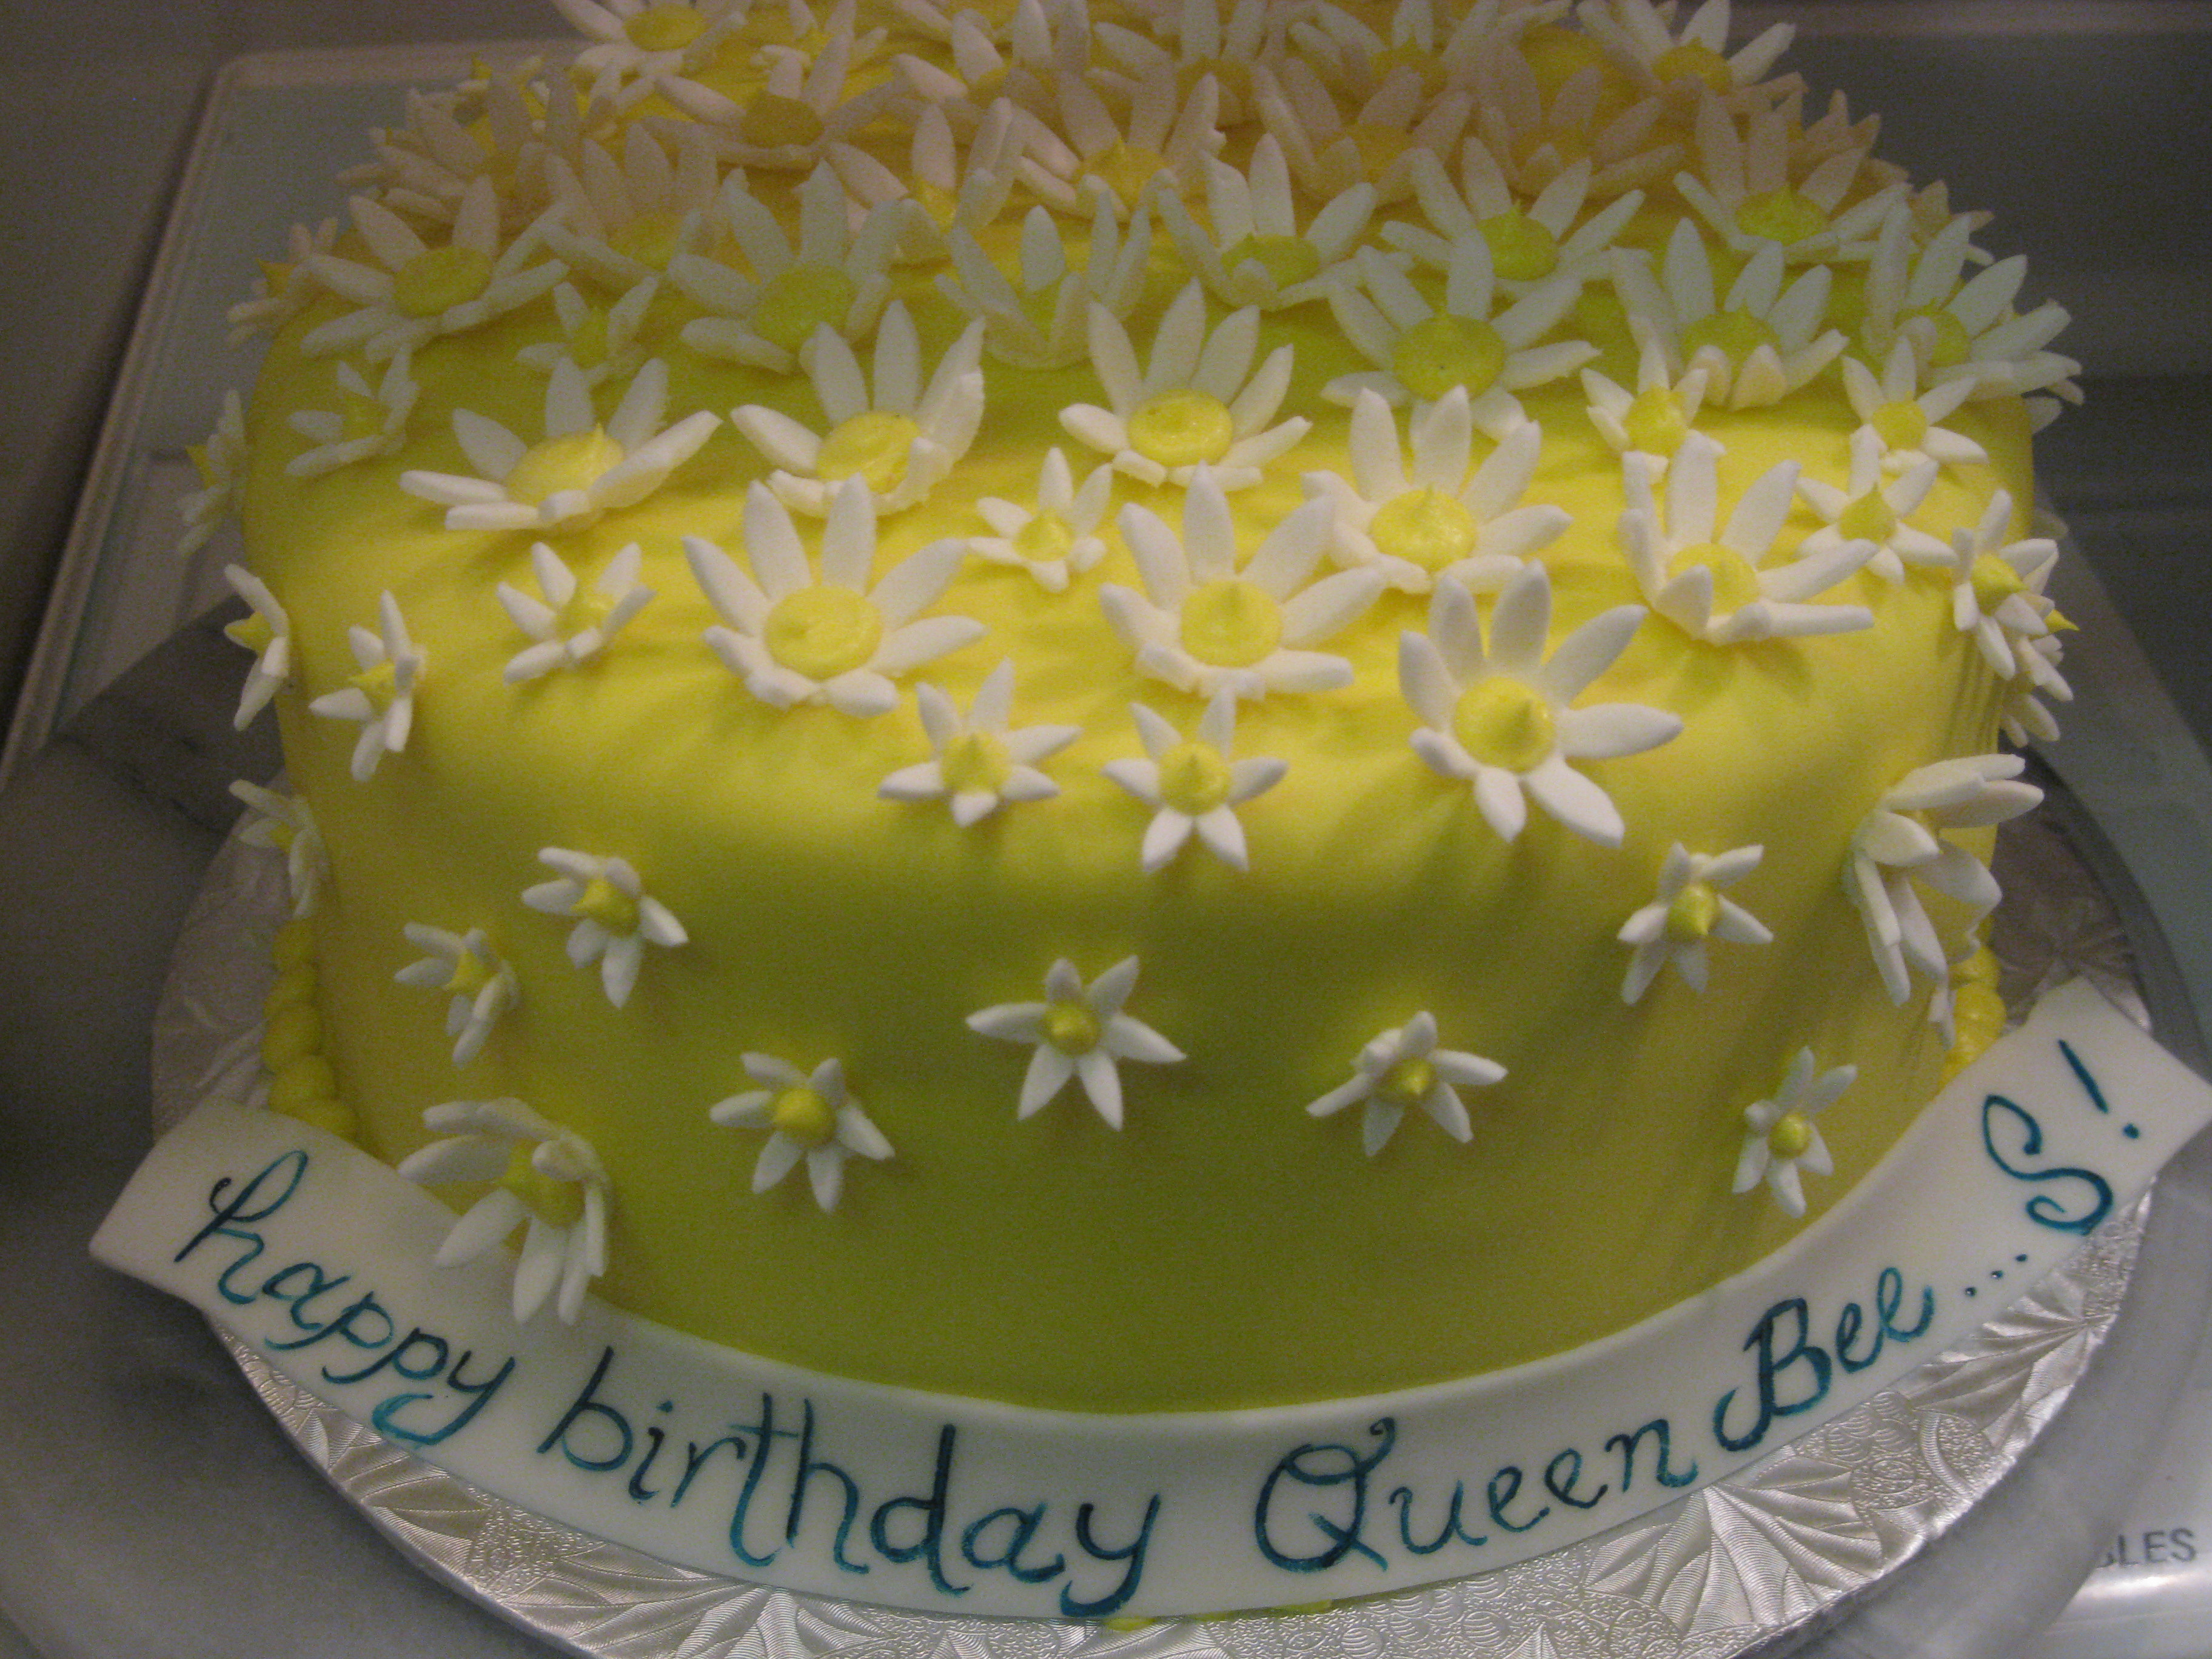 Best ideas about Lemon Birthday Cake
. Save or Pin kite birthday cake Now.